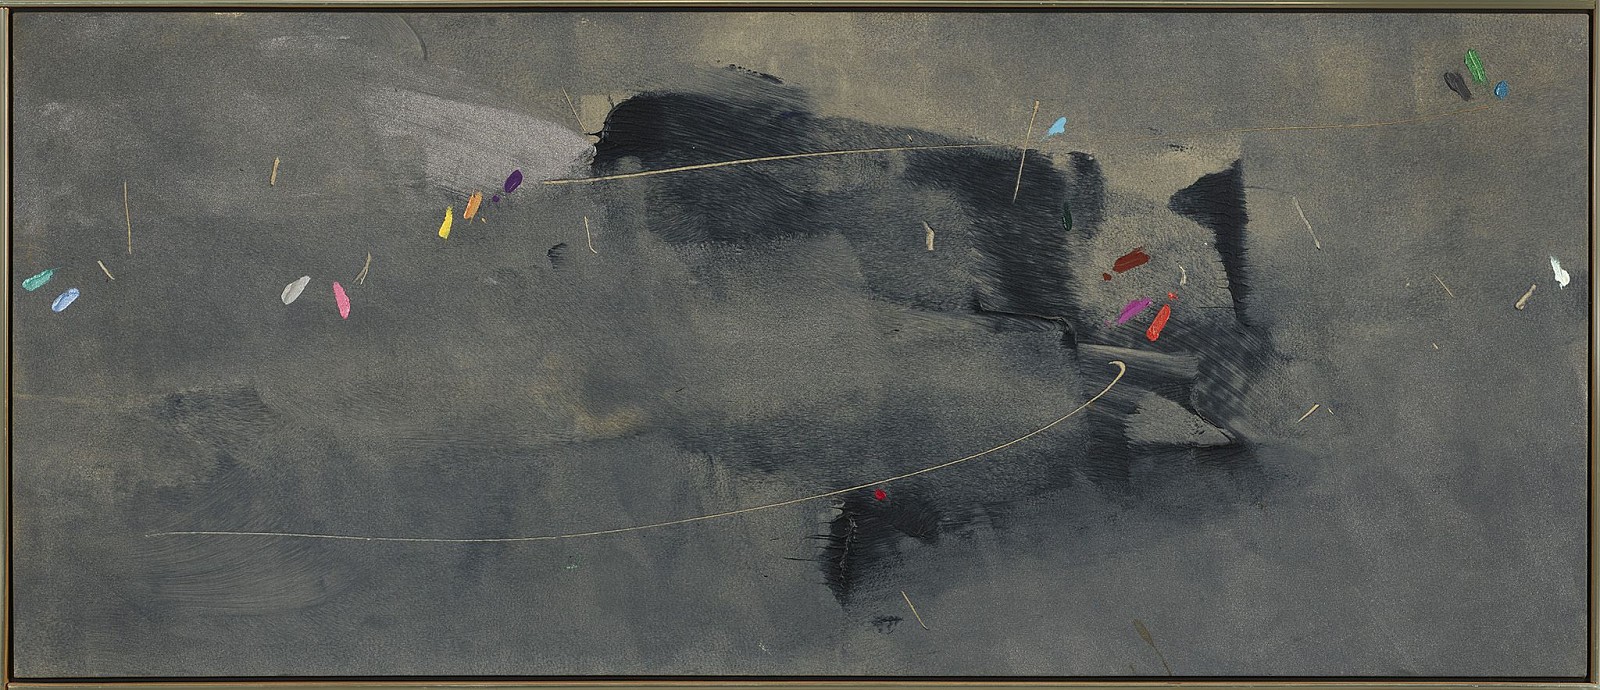 Kikuo Saito, Noir, 1985
Acrylic on canvas, 33 1/4 x 78 1/4 in. (84.5 x 198.8 cm)
SAI-00009